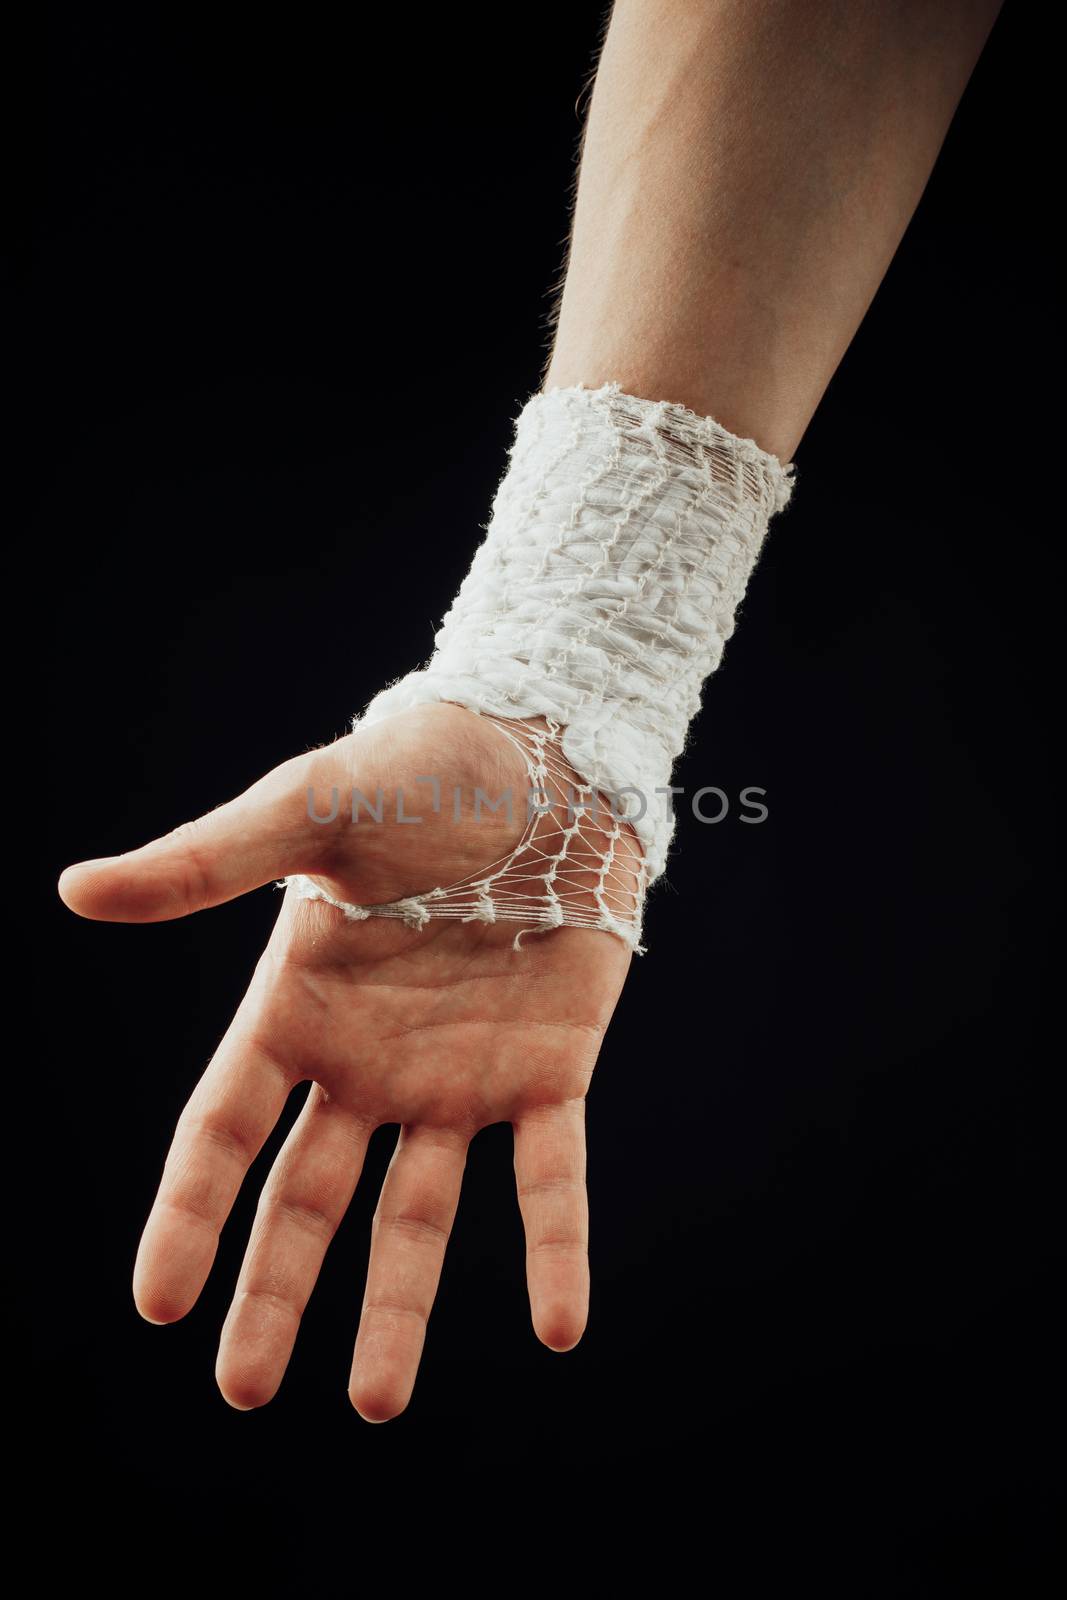 wrist wrapped with healing bandage, isolated on black